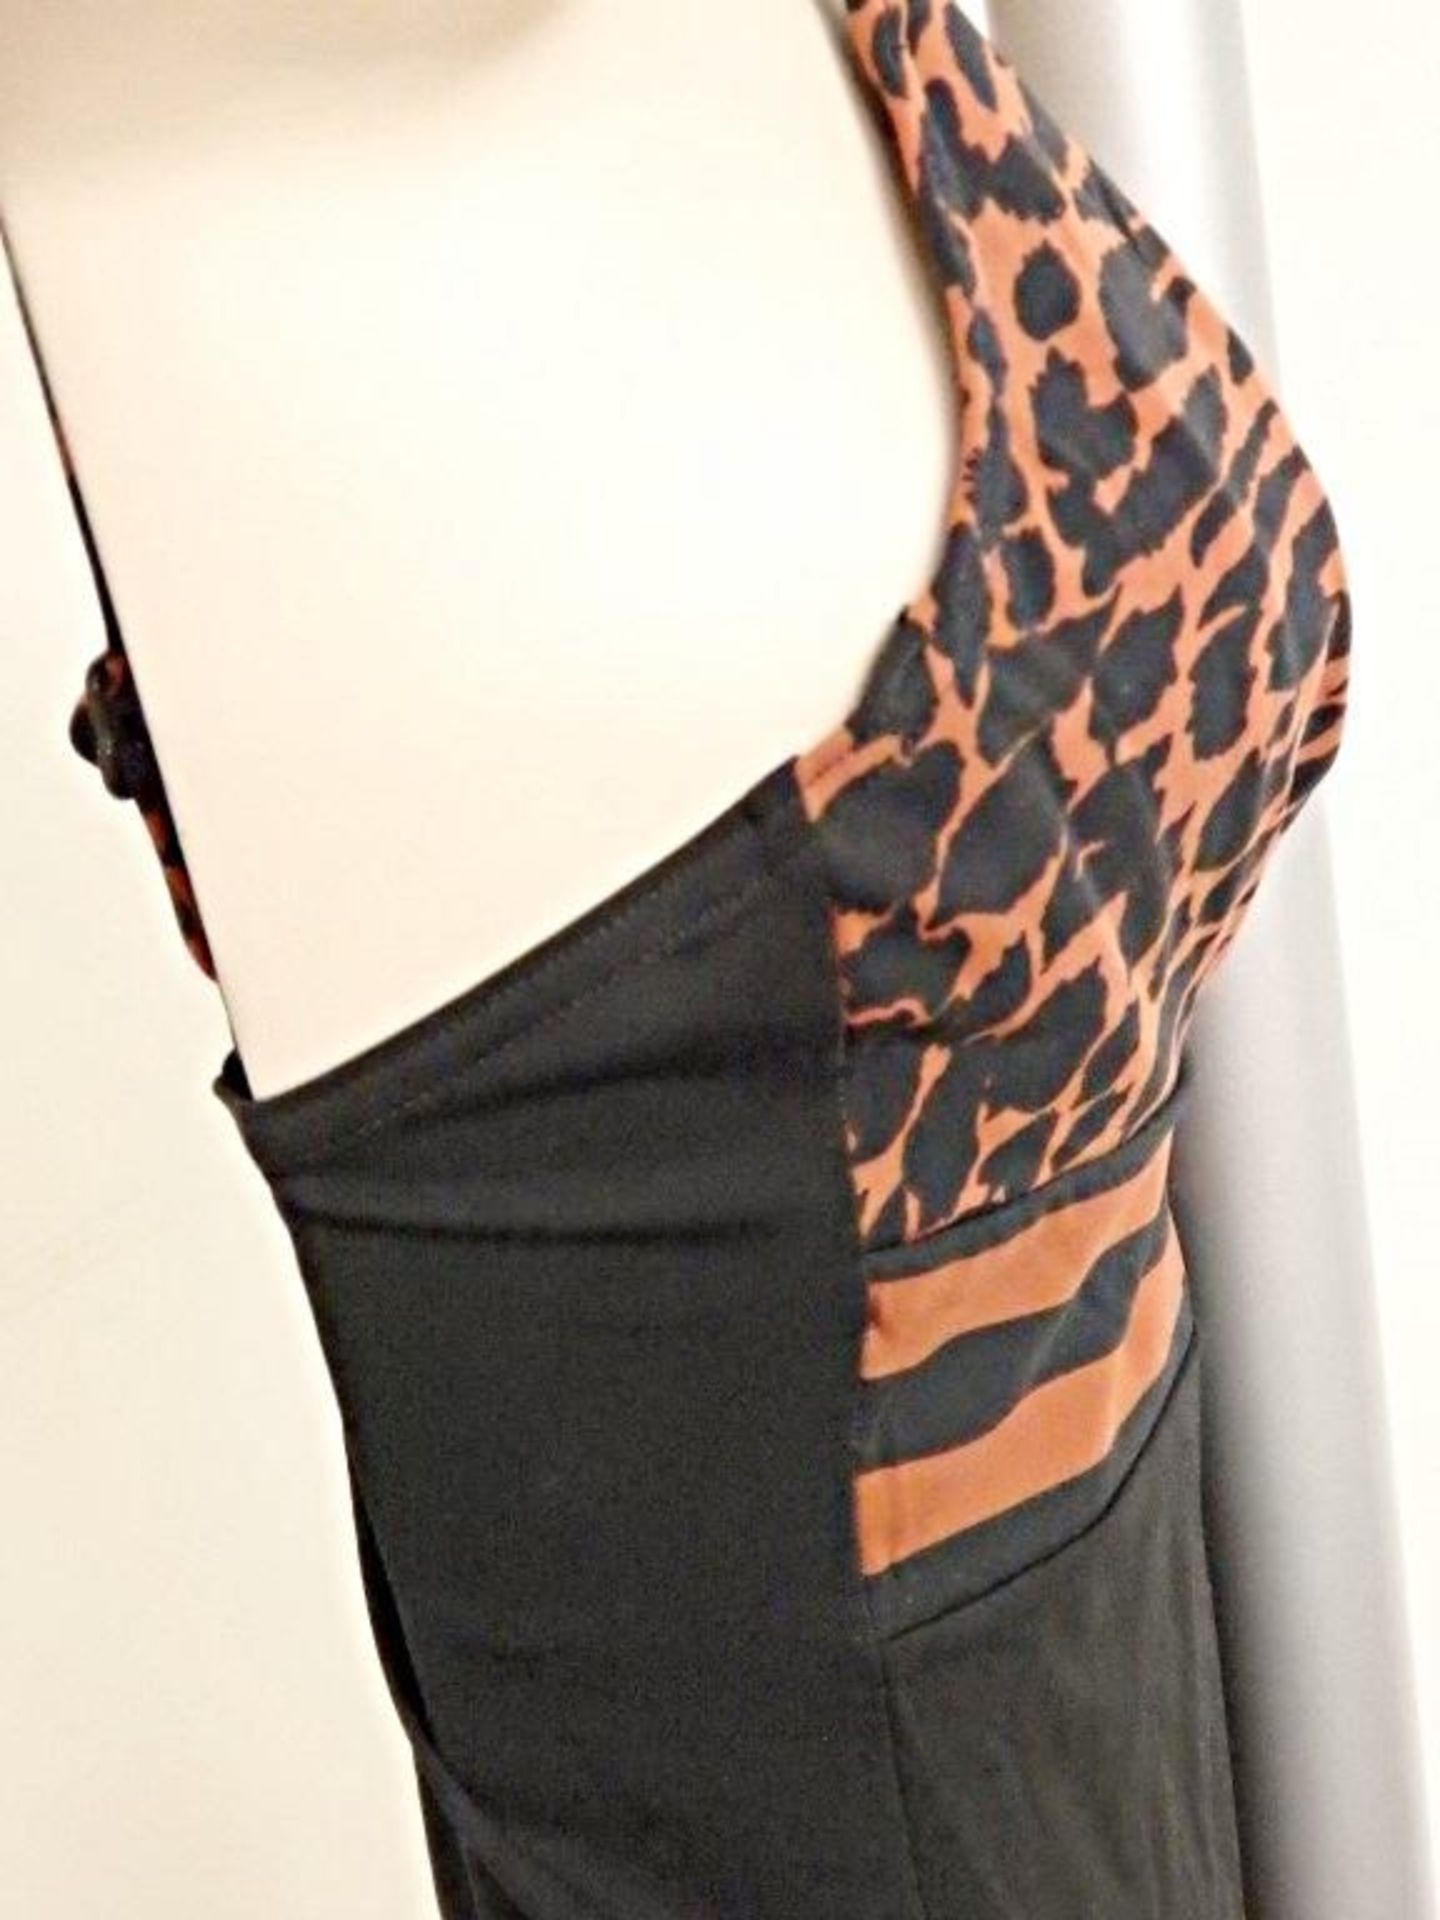 1 x Rasurel - Black/Tan Leopard and Stripe - Bahia Swimsuit - R21235 - Size 2C - UK 32 - Fr 85 - EU - Image 3 of 7